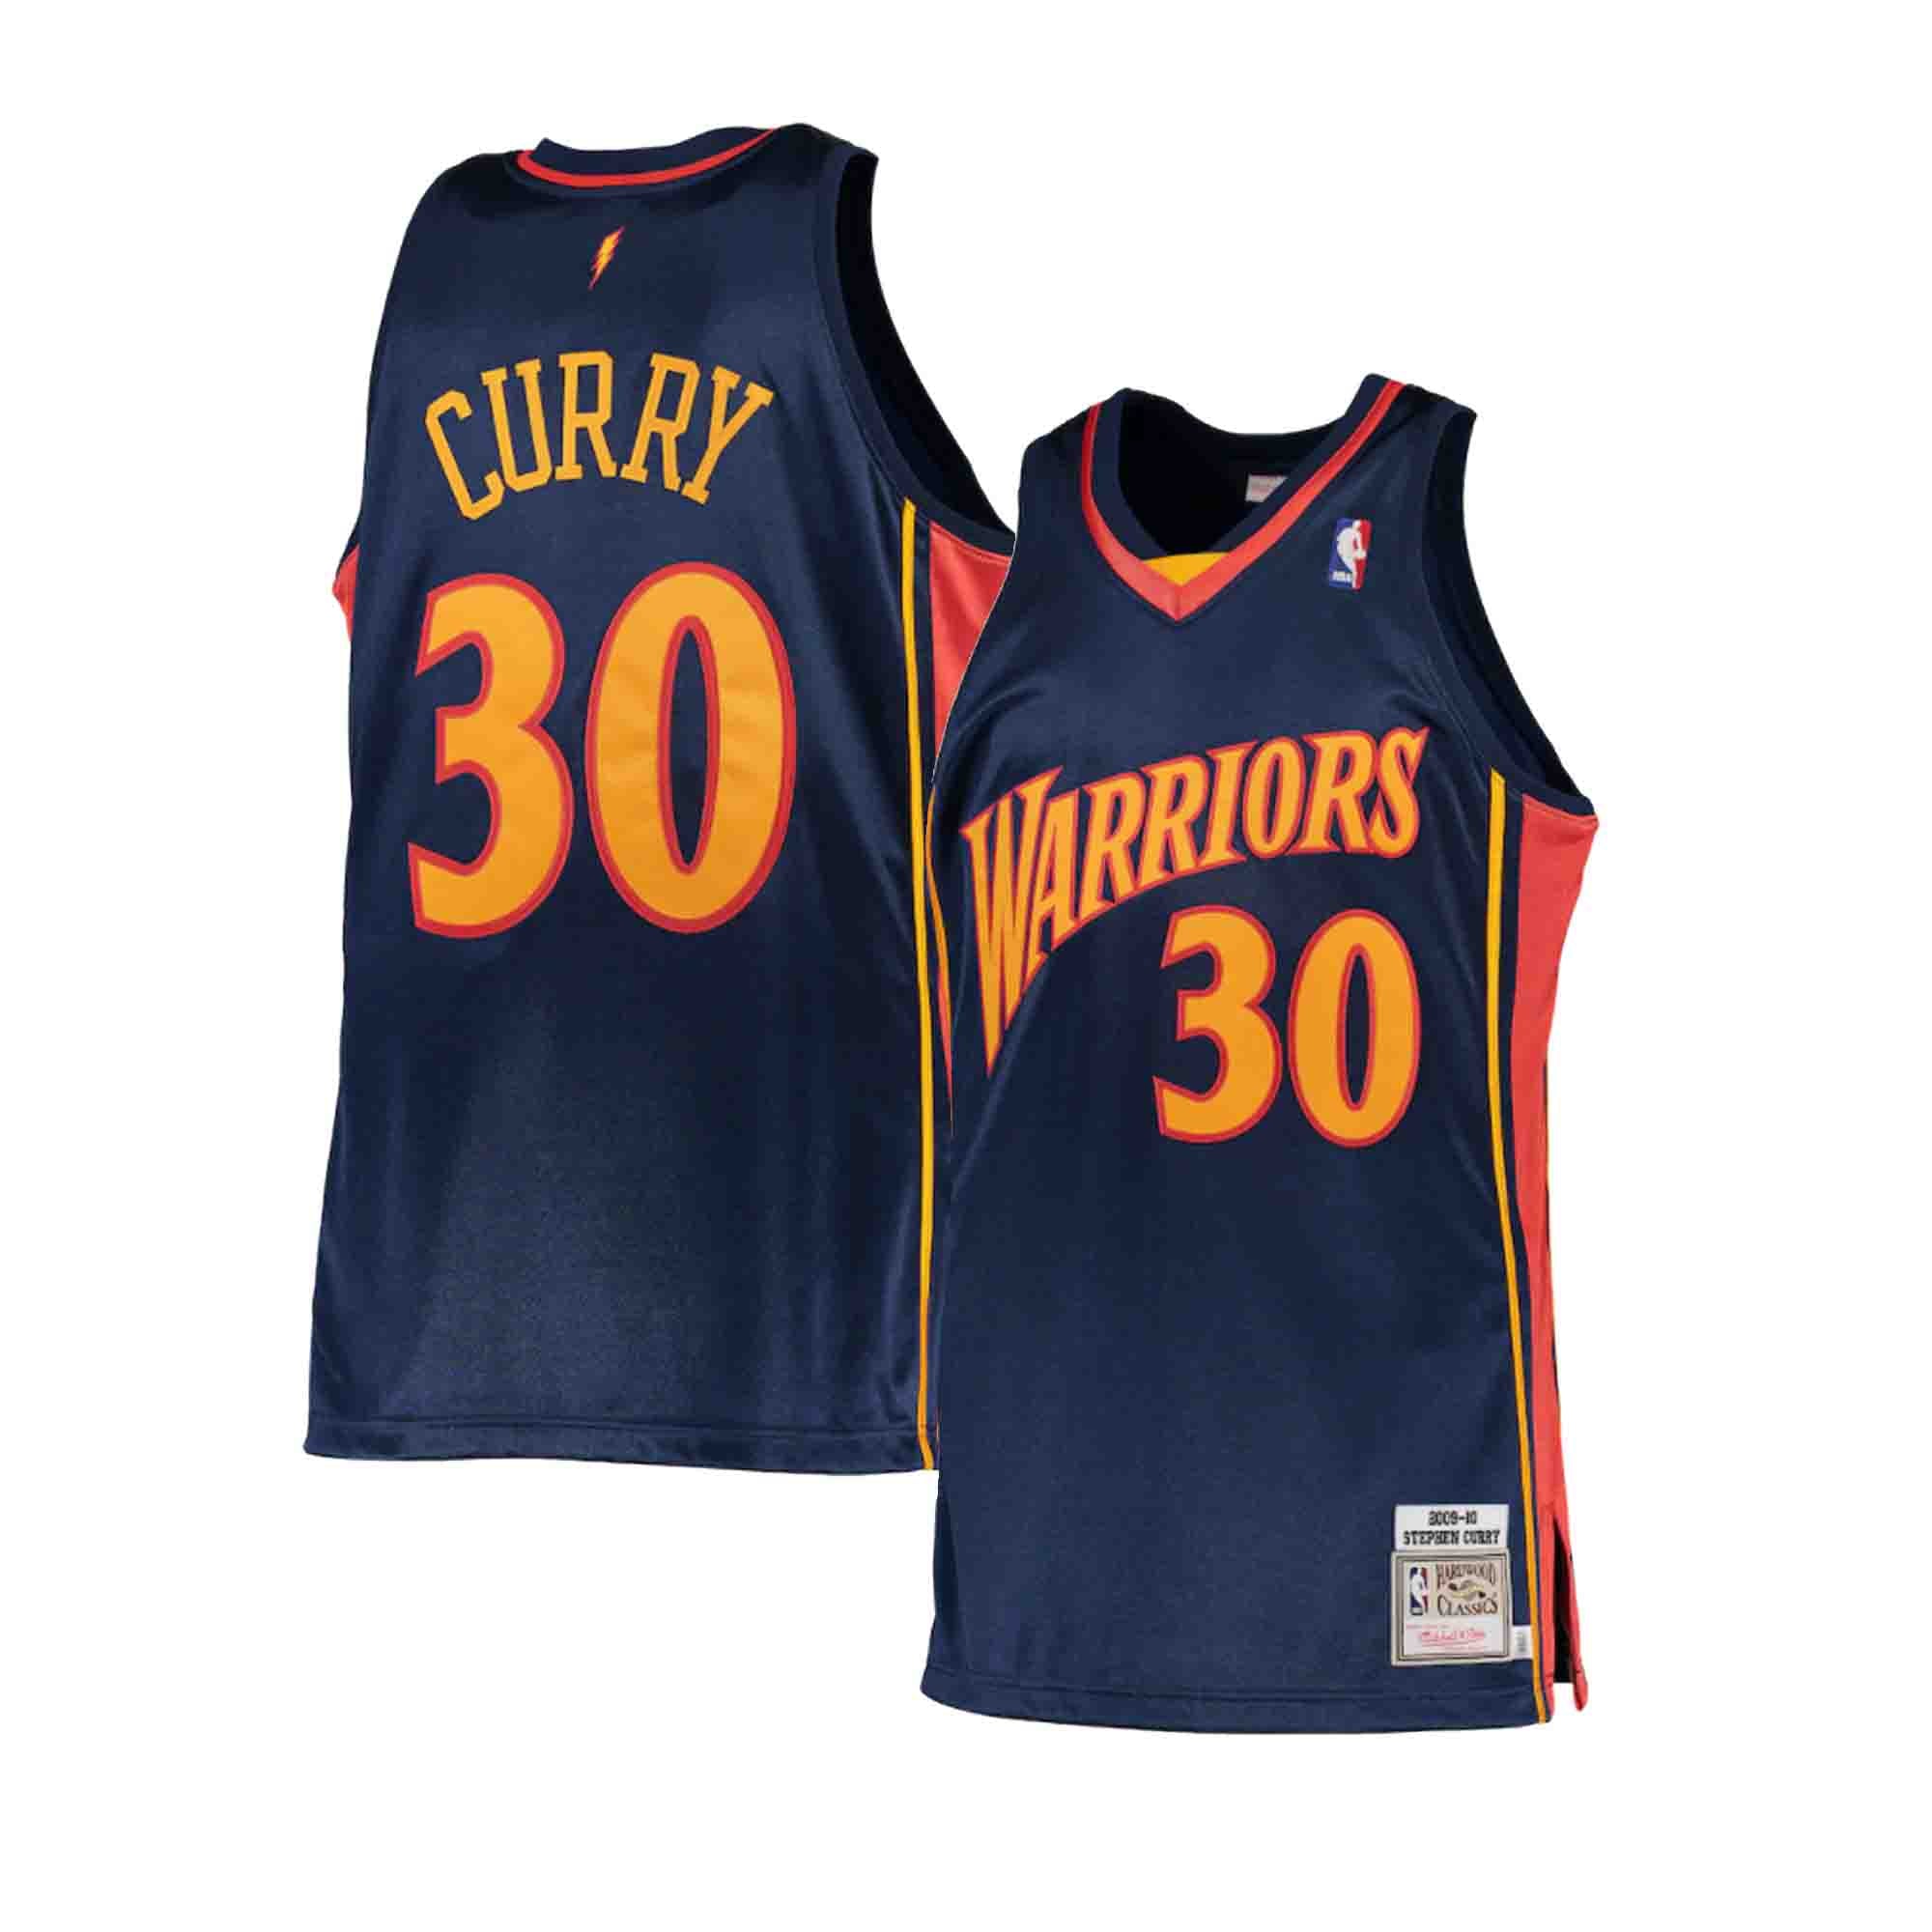 ✵Golden State Warriors Stephen Curry 2009-2010 Jersey✮